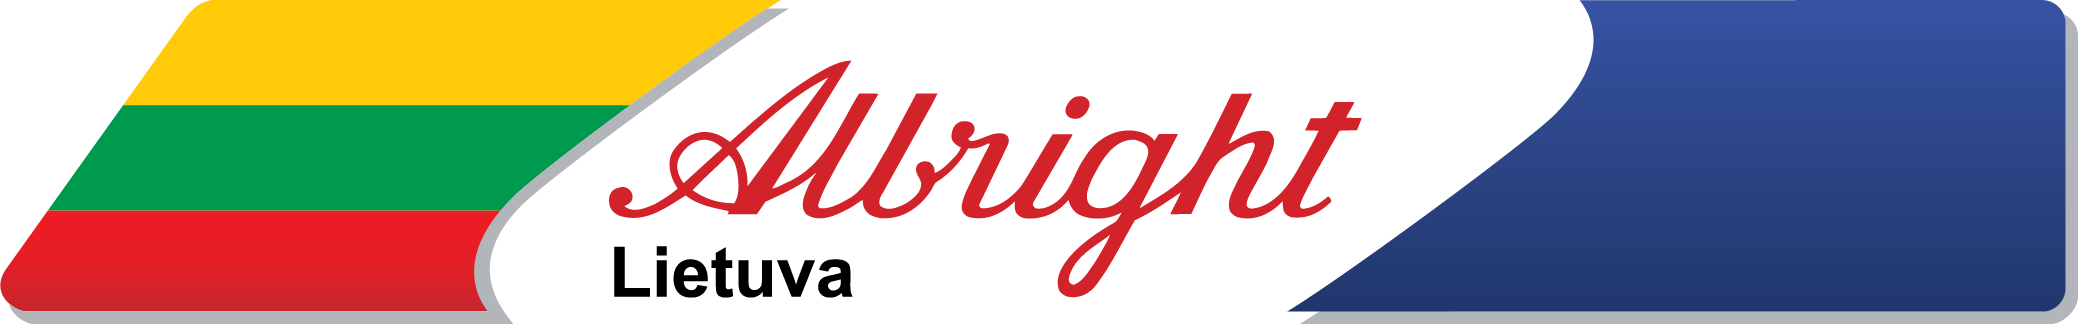 Albright Logo - Lietuva